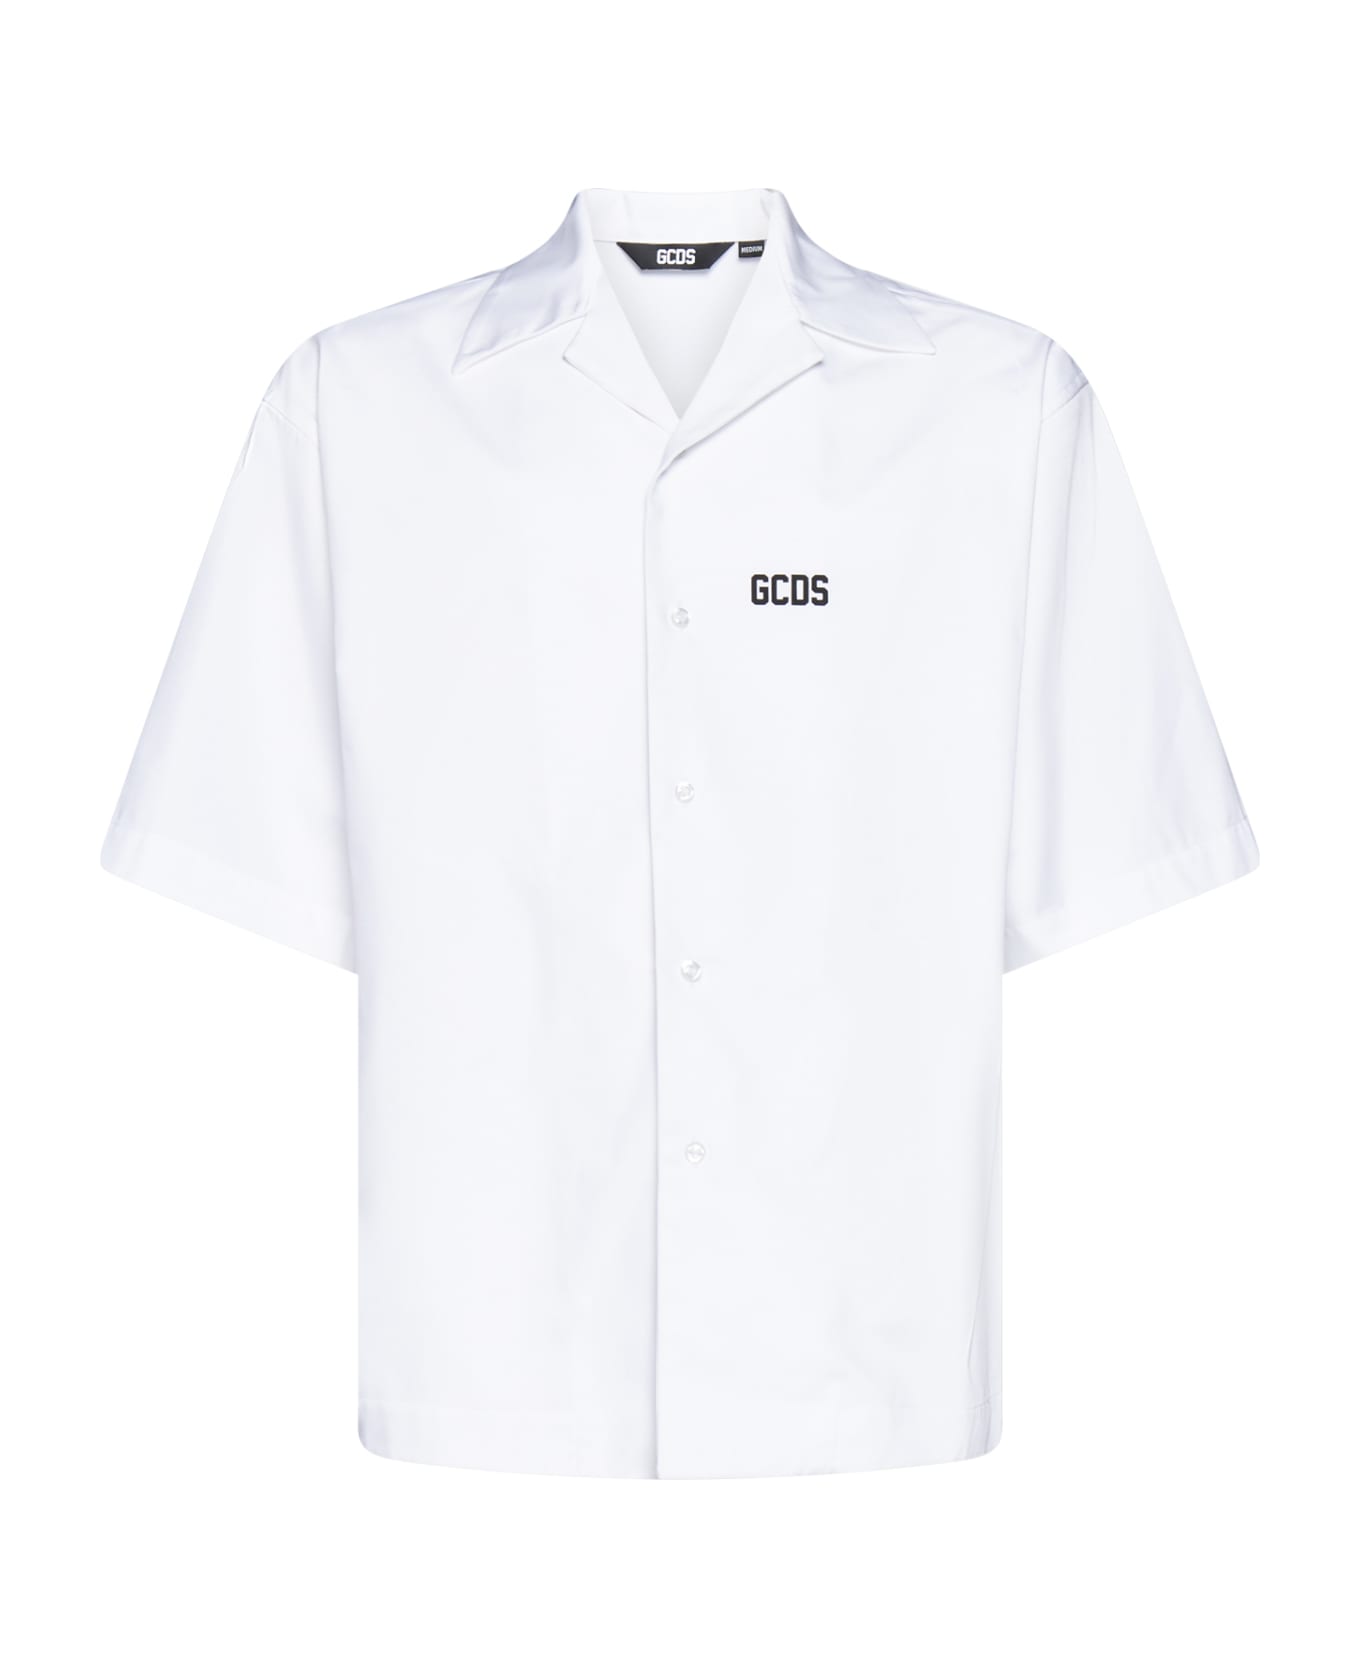 GCDS Shirt - White